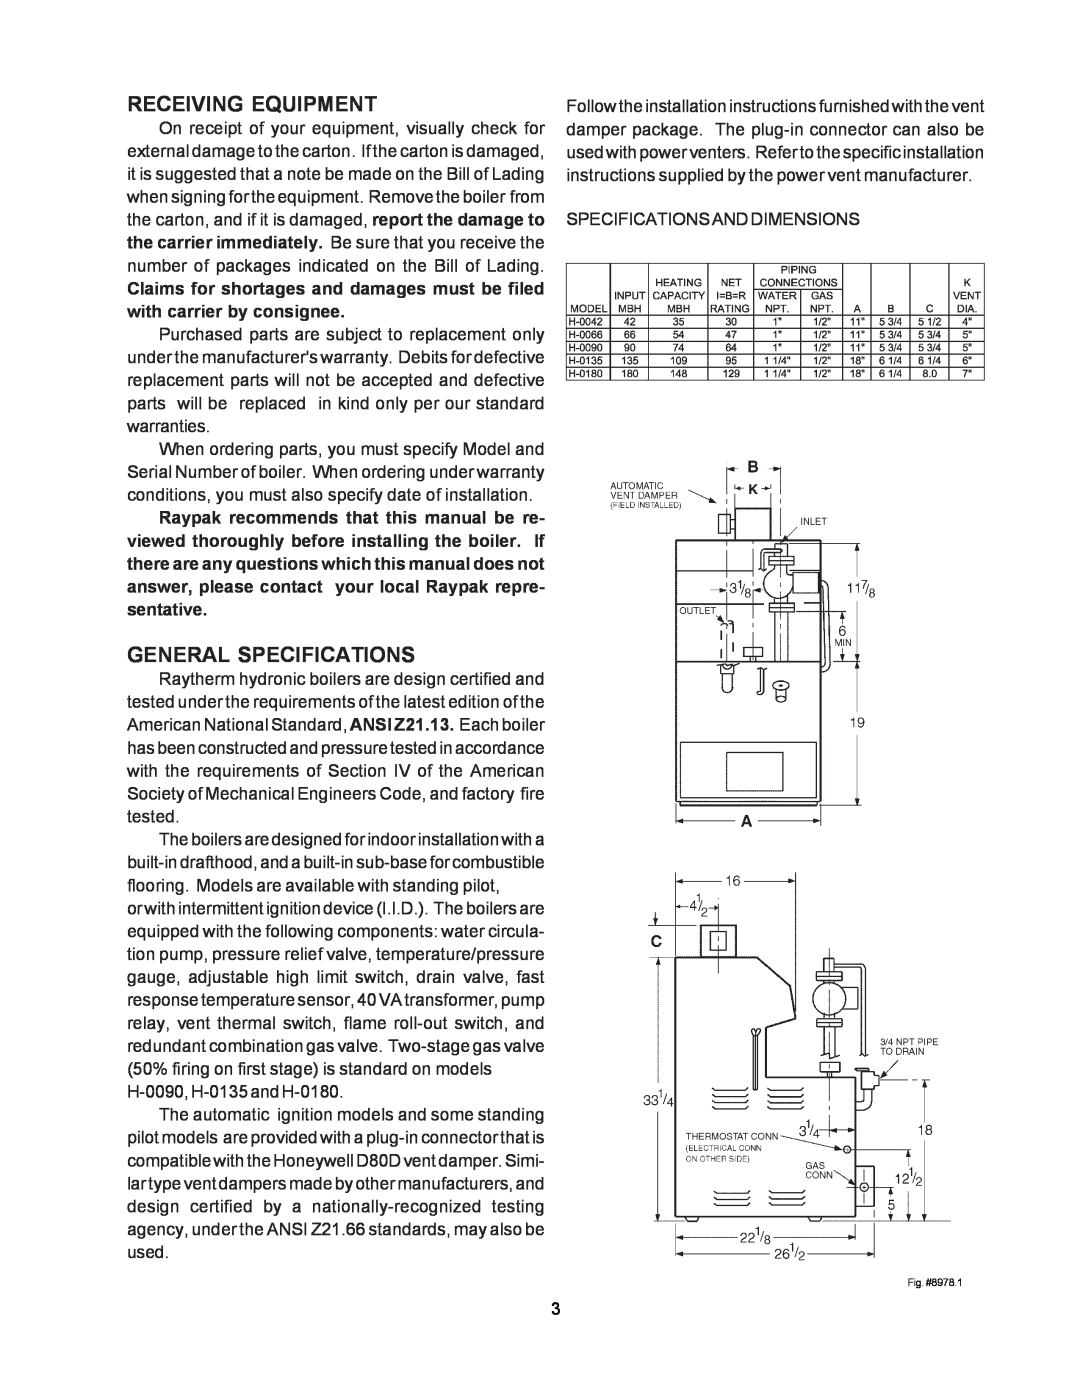 Raypak 0066B, 0180B, 0042B manual Receiving Equipment, General Specifications 